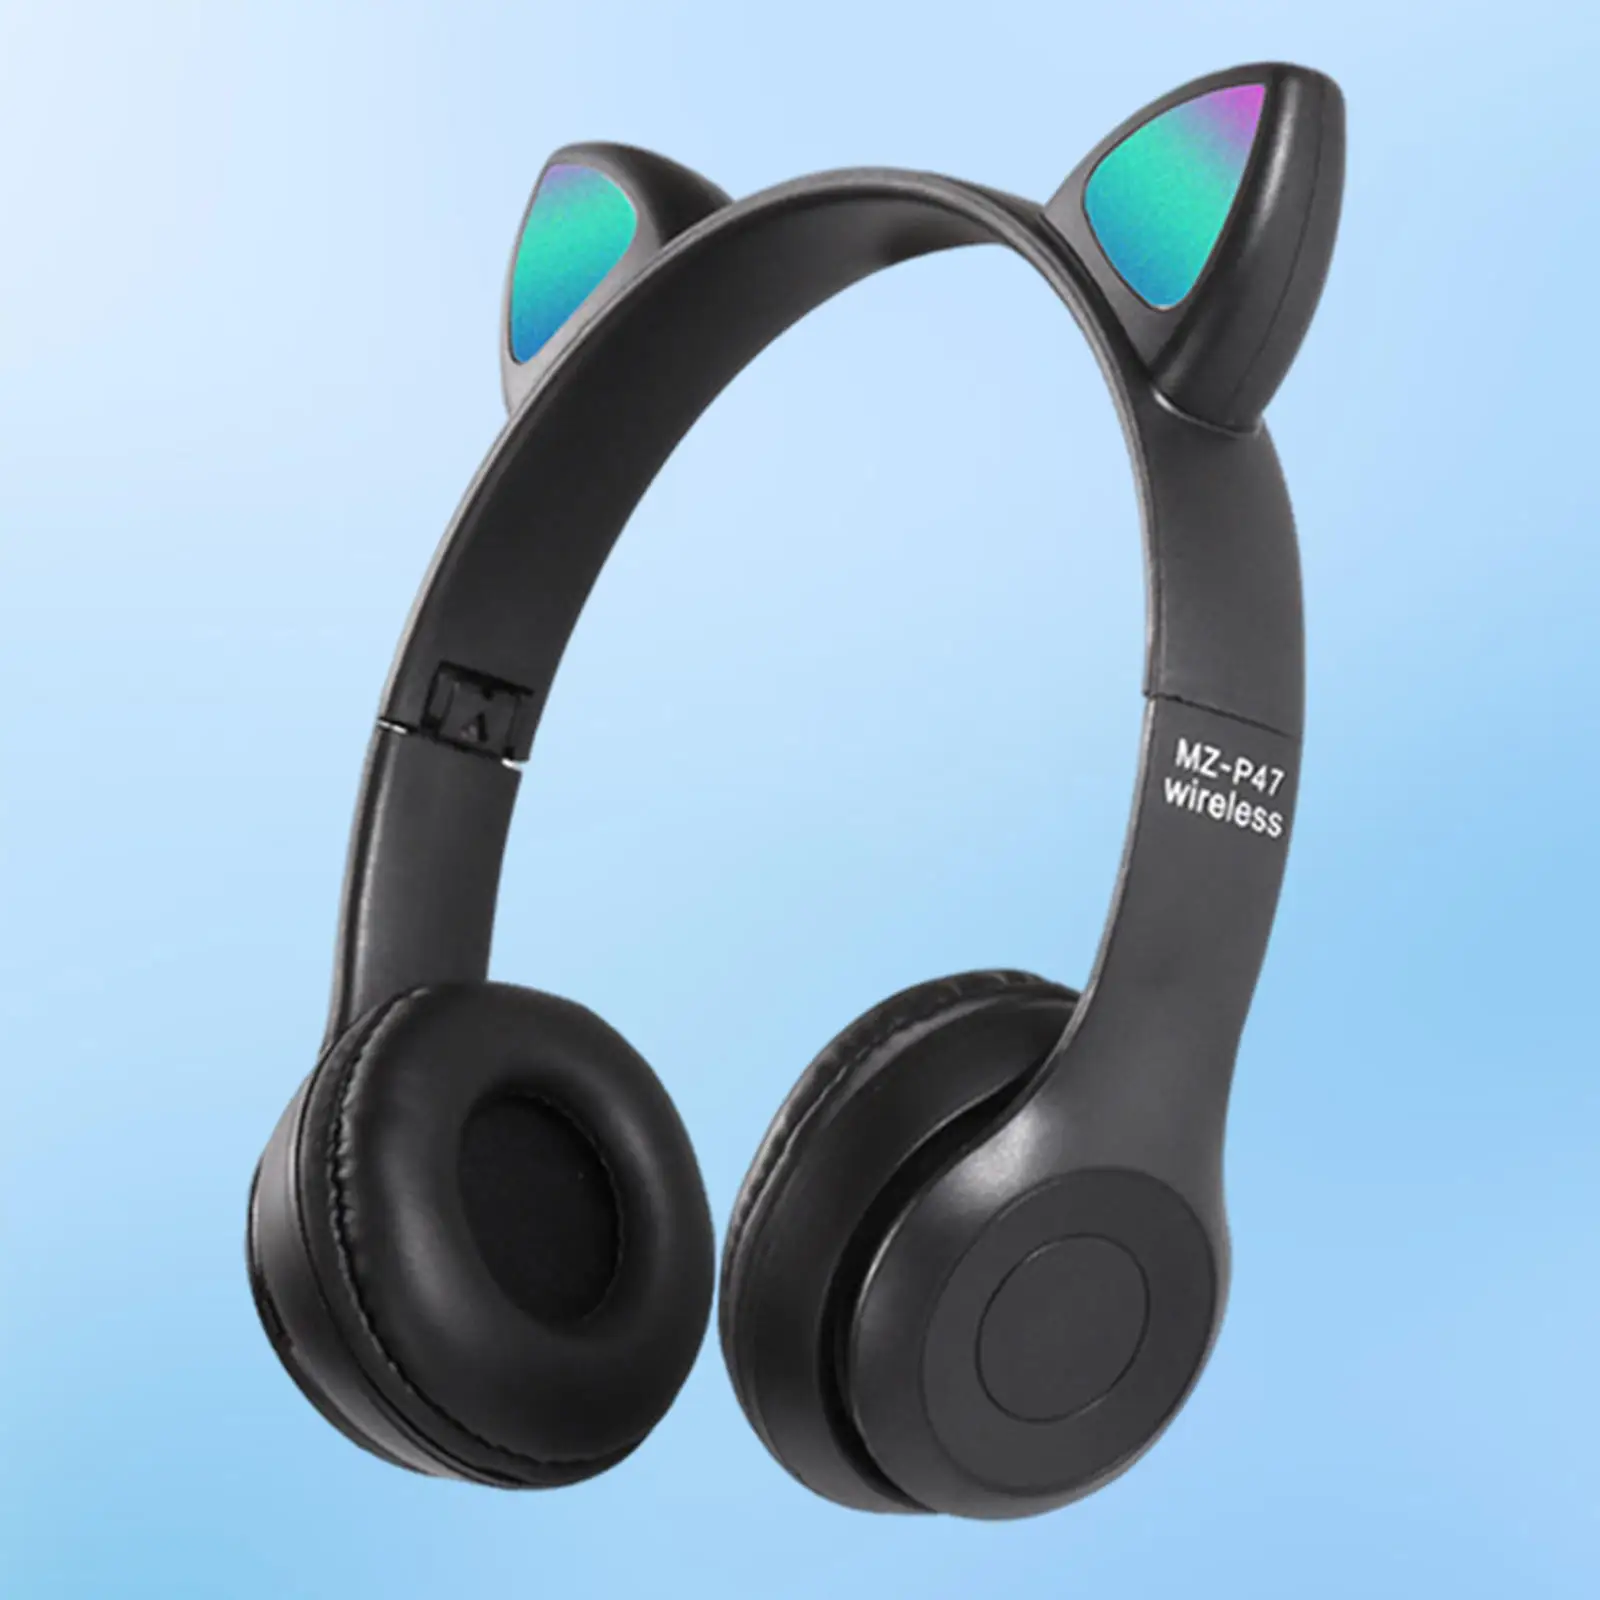 Cat Ears Wireless Headset Stereo Bluetooth 5.0 RGB Soft Earmuffs MP3 Player Headphone for Mobile Phones Laptops Music Men Women